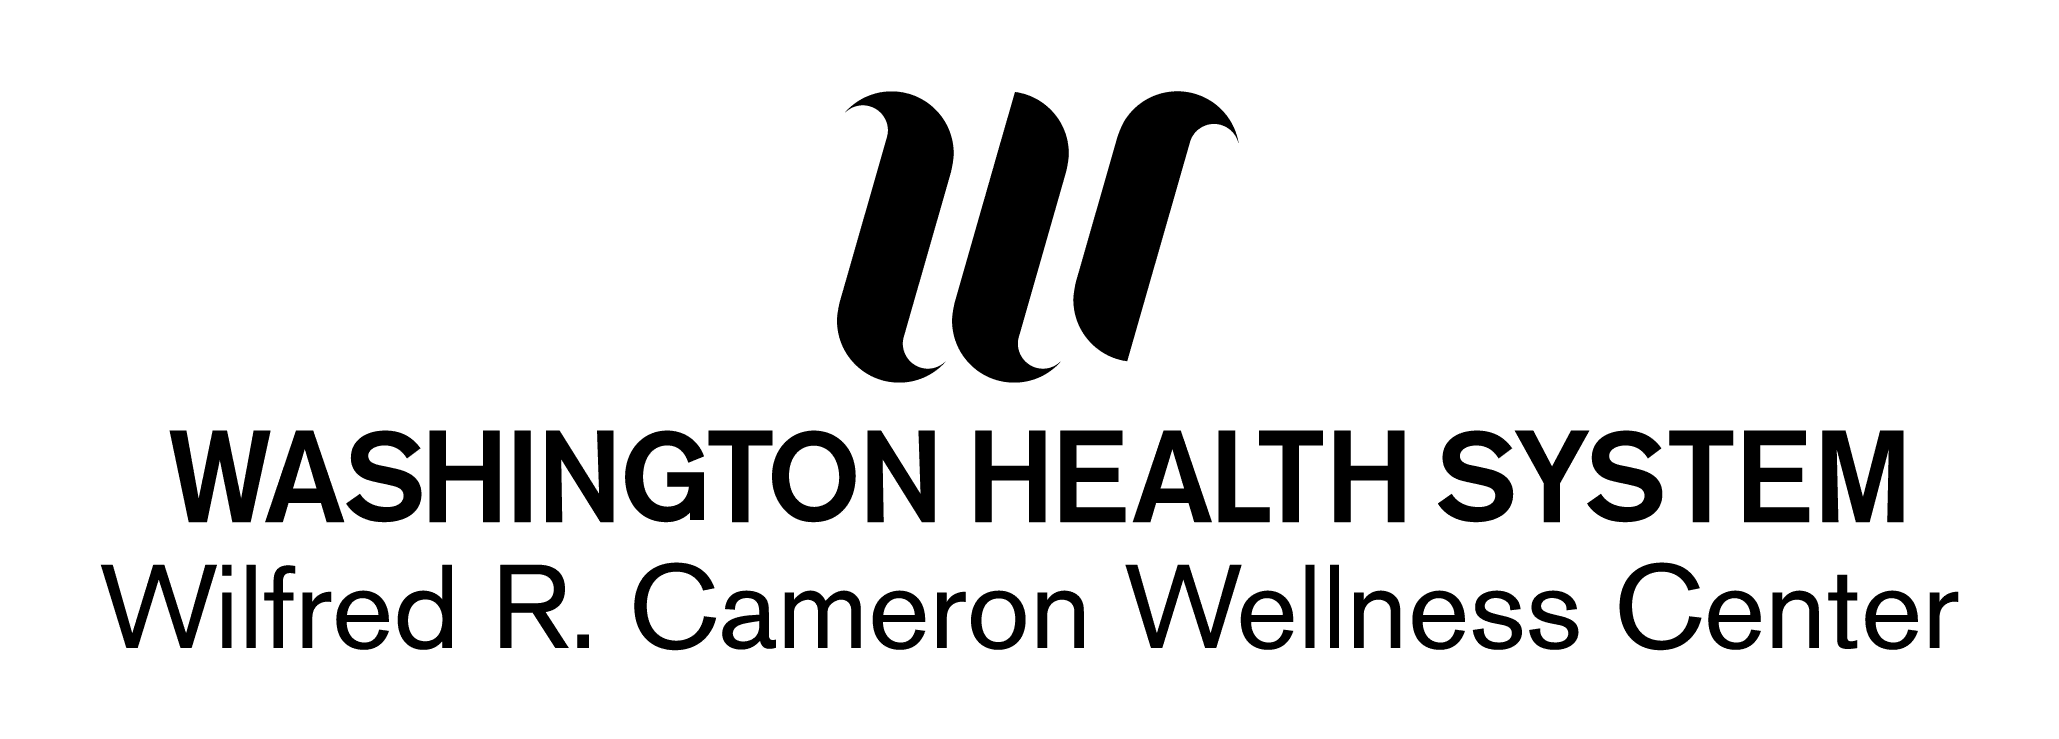 Washington Health System, Wilfred R. Cameron Wellness Center Logo